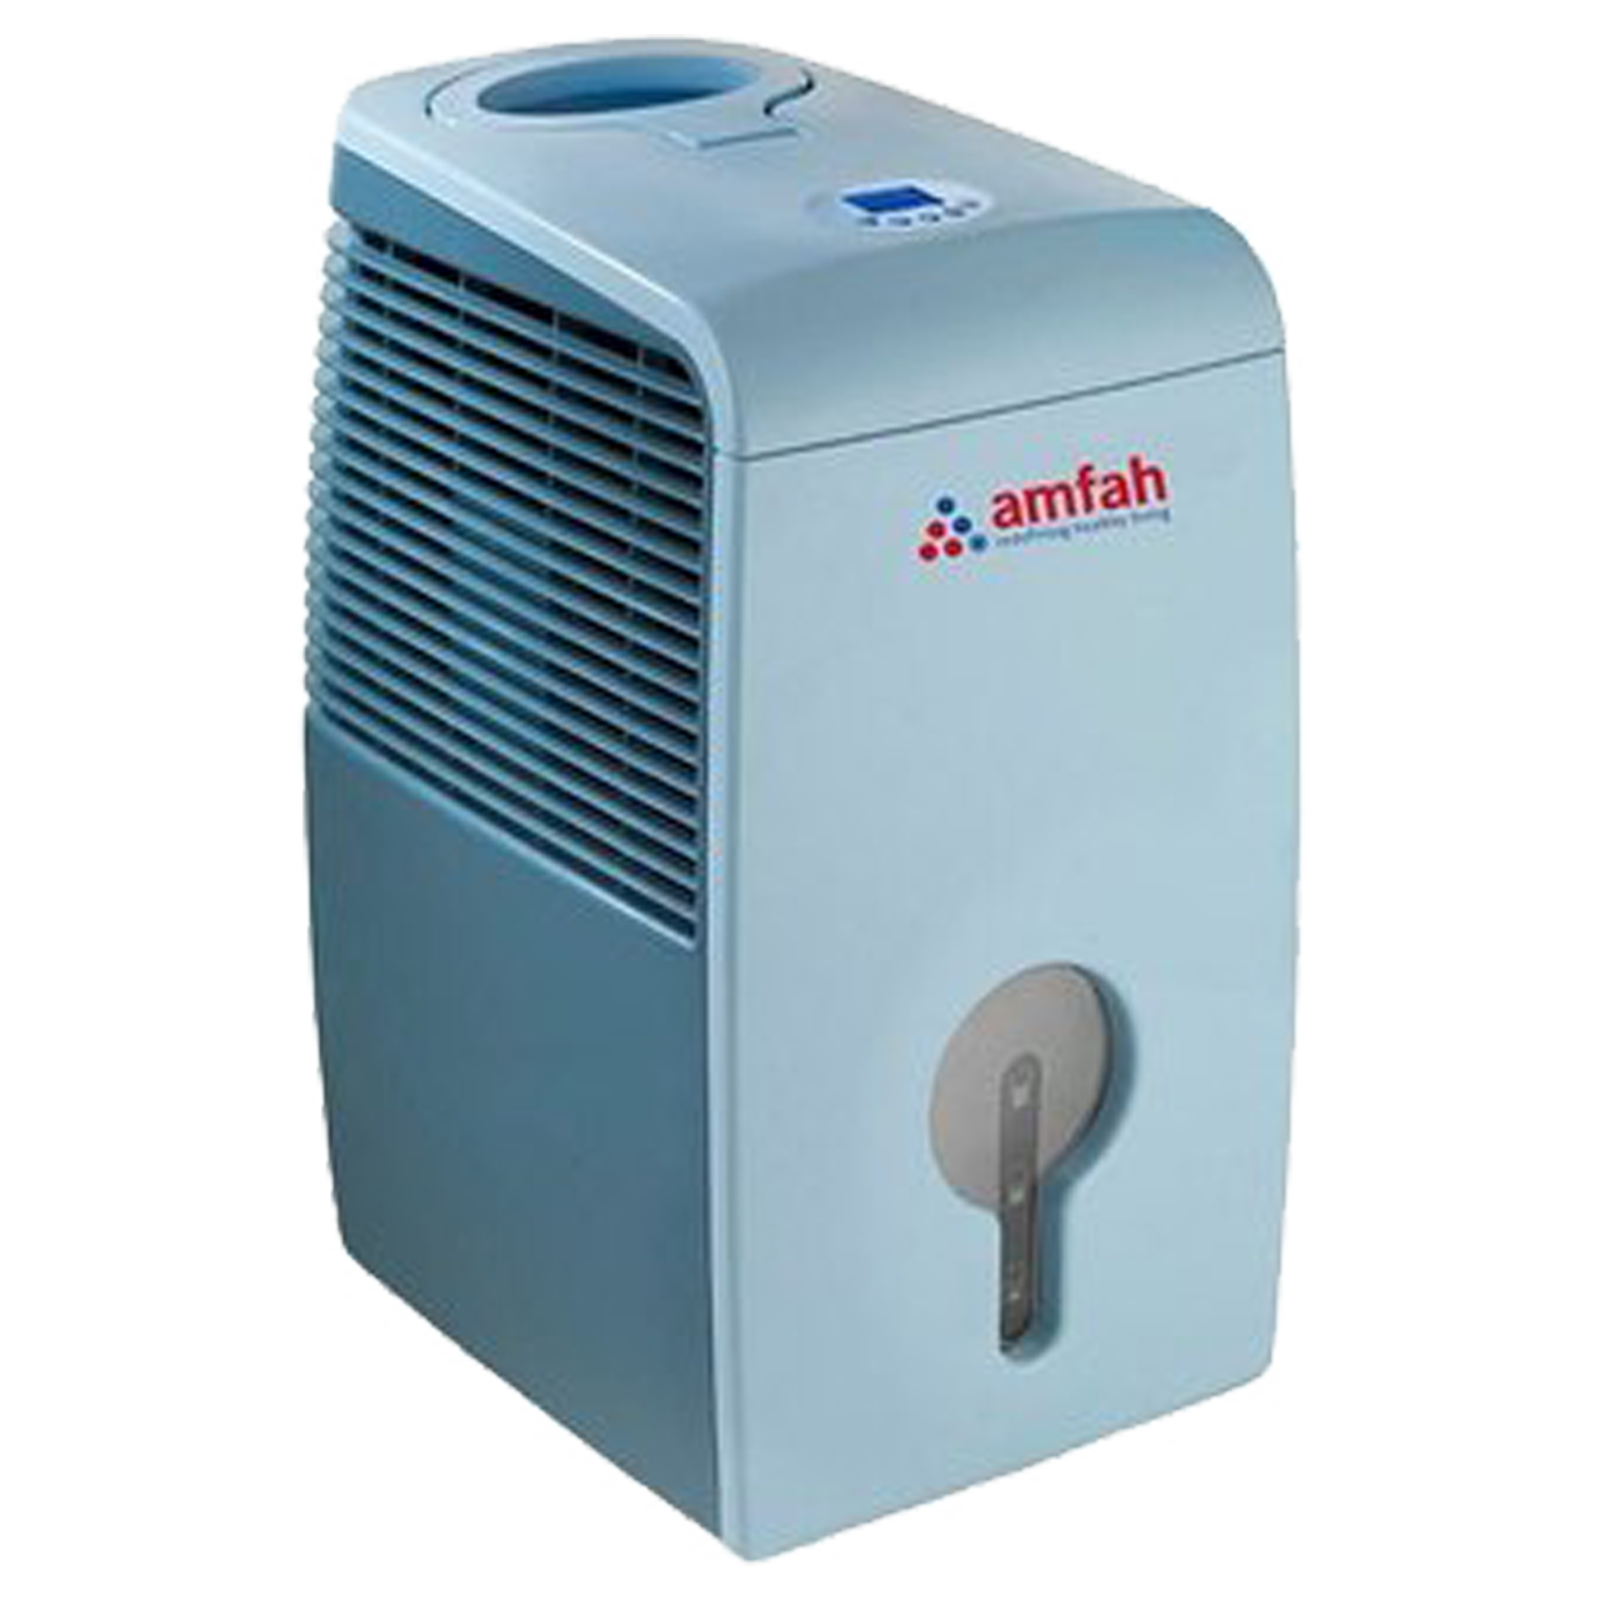 Amfah Aquadry 28 Triple Filtration System Dehumidifier (Tank full Indicator, Blue)_1